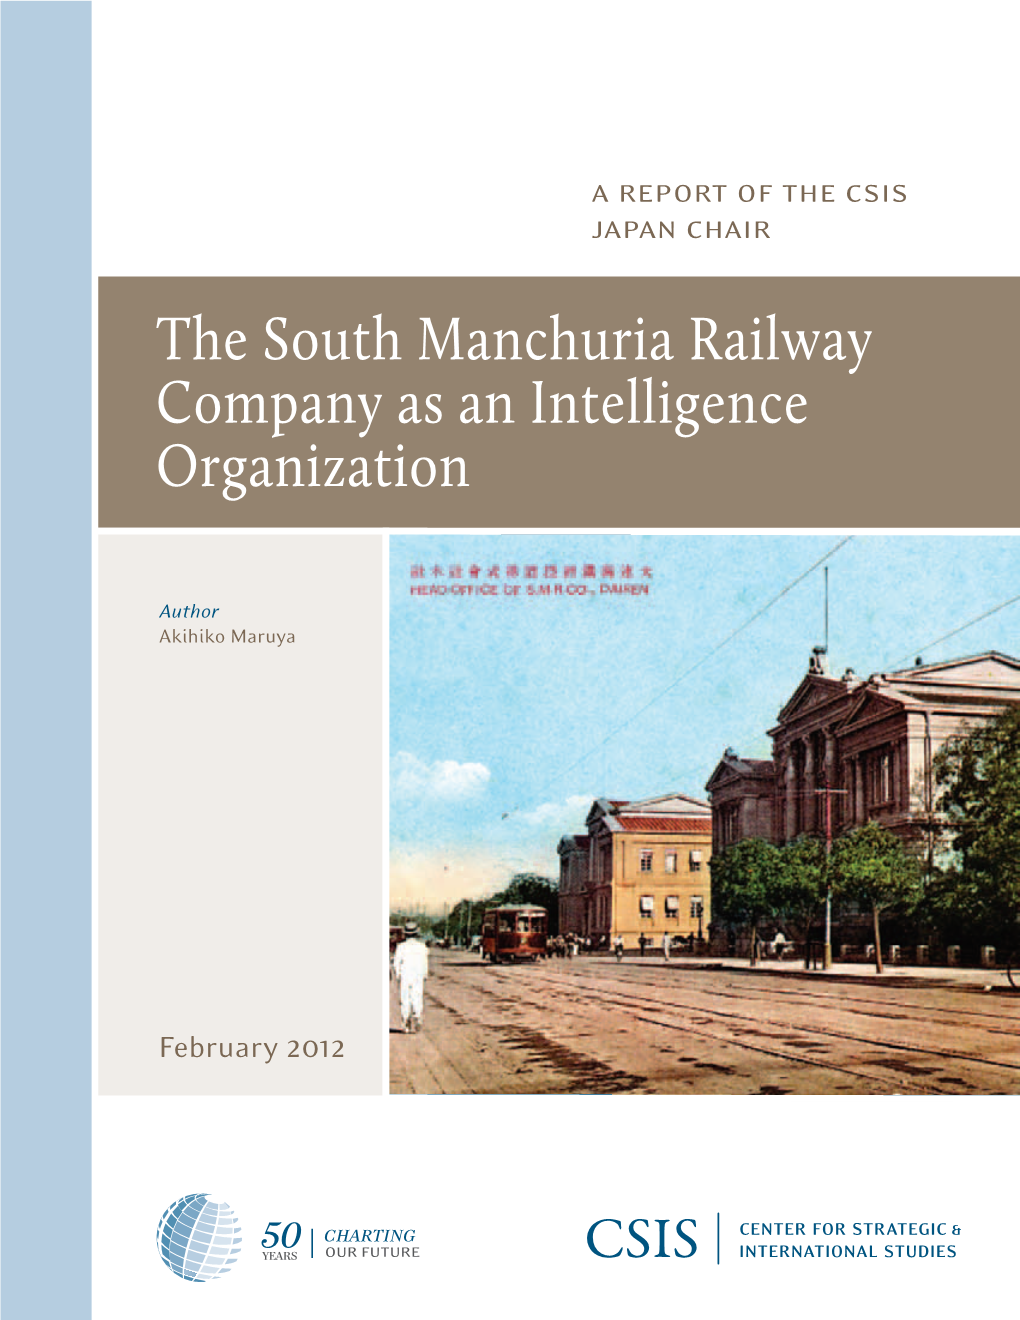 The South Manchuria Railway Company As an Intelligence Organization